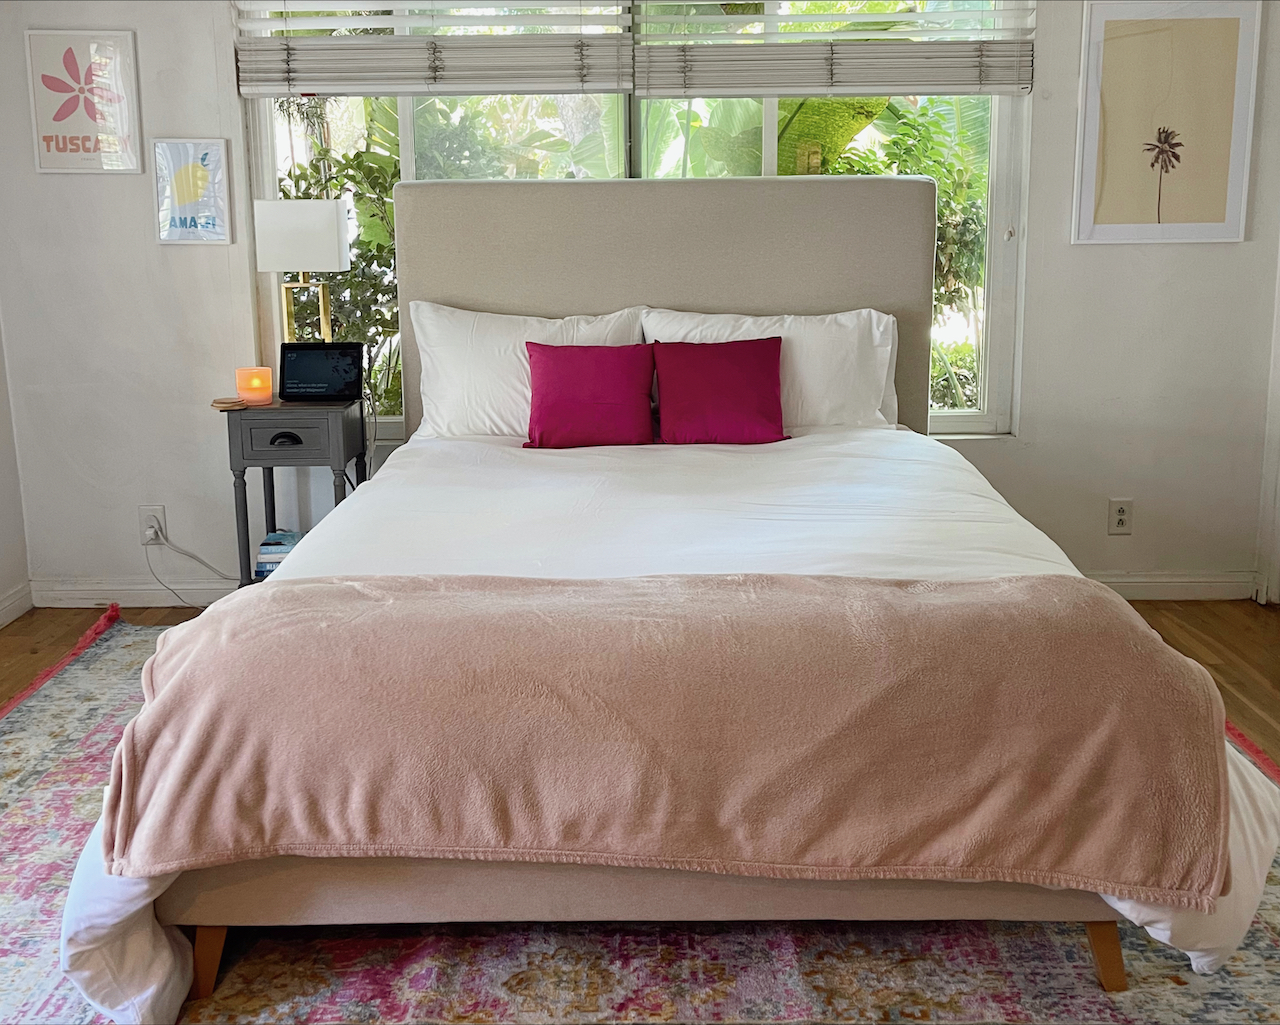 My Beverly Hills Bedroom Reveal